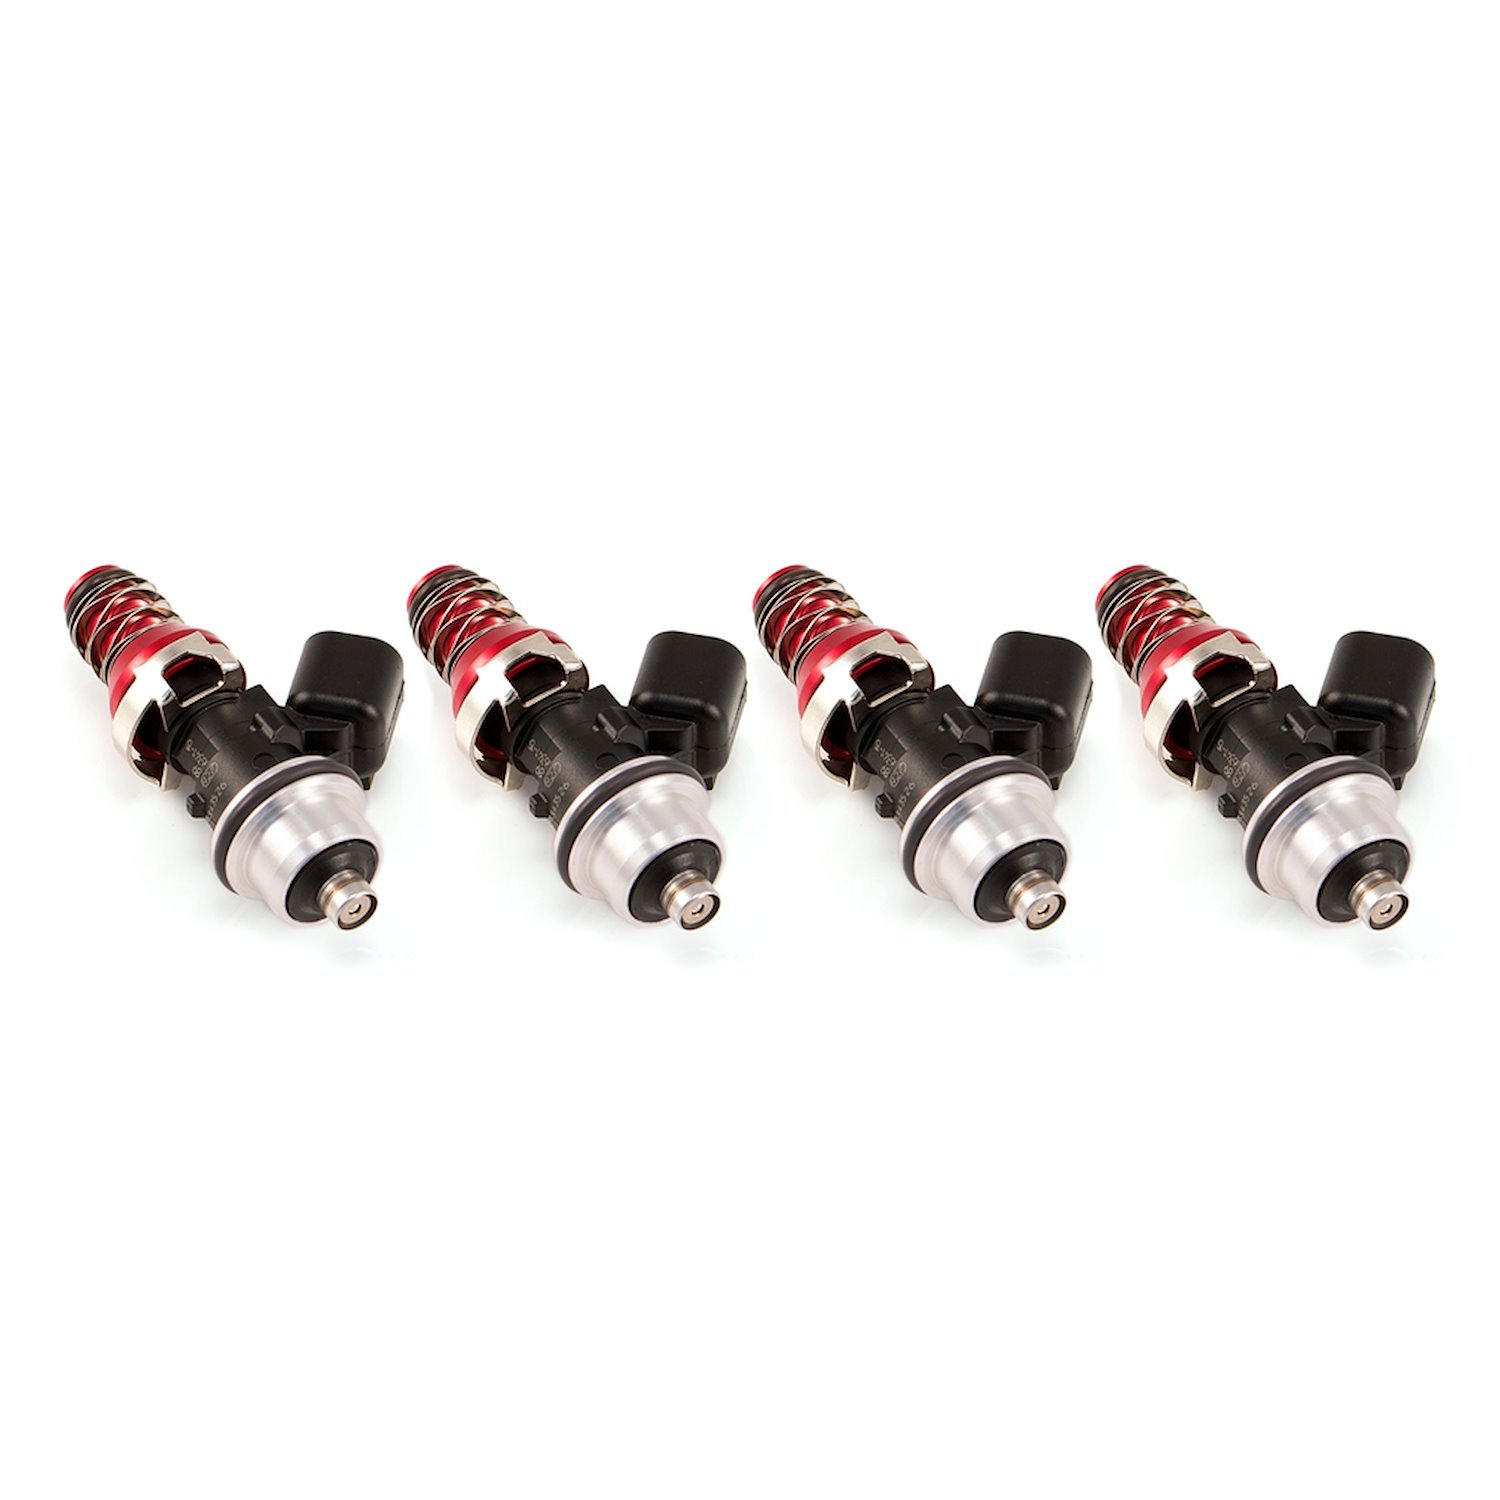 1050.48.11.F20.4 1050cc Fuel Injector Set, 11 mm (Red) Adaptors, S2K Lower